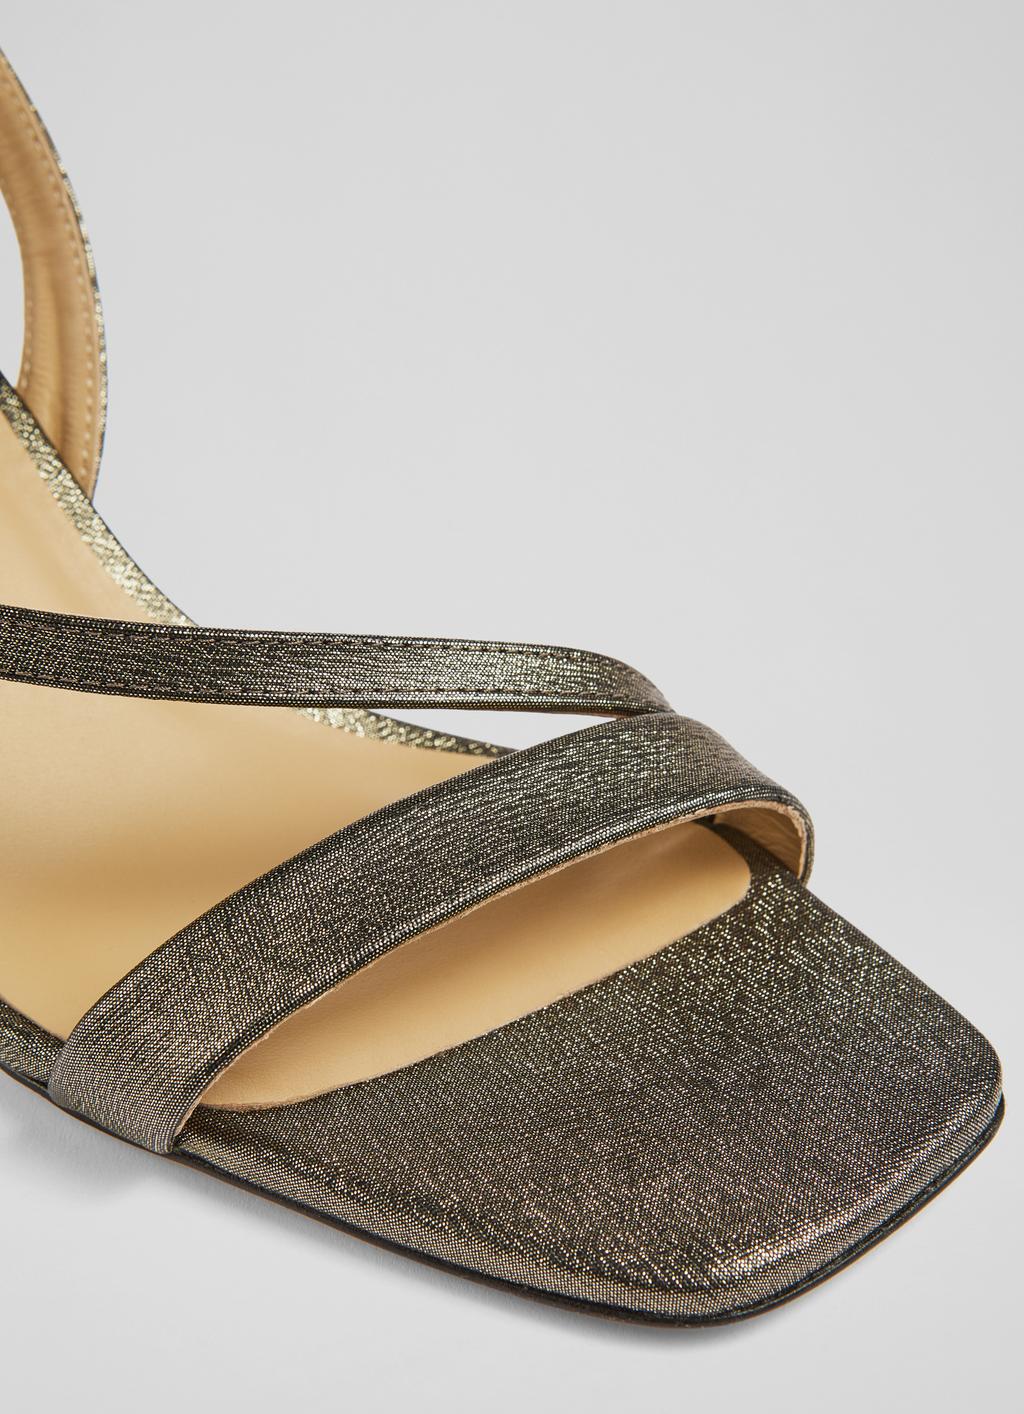 Gretal Bronze Glitter Asymmetric Strappy Sandals | Shoes 